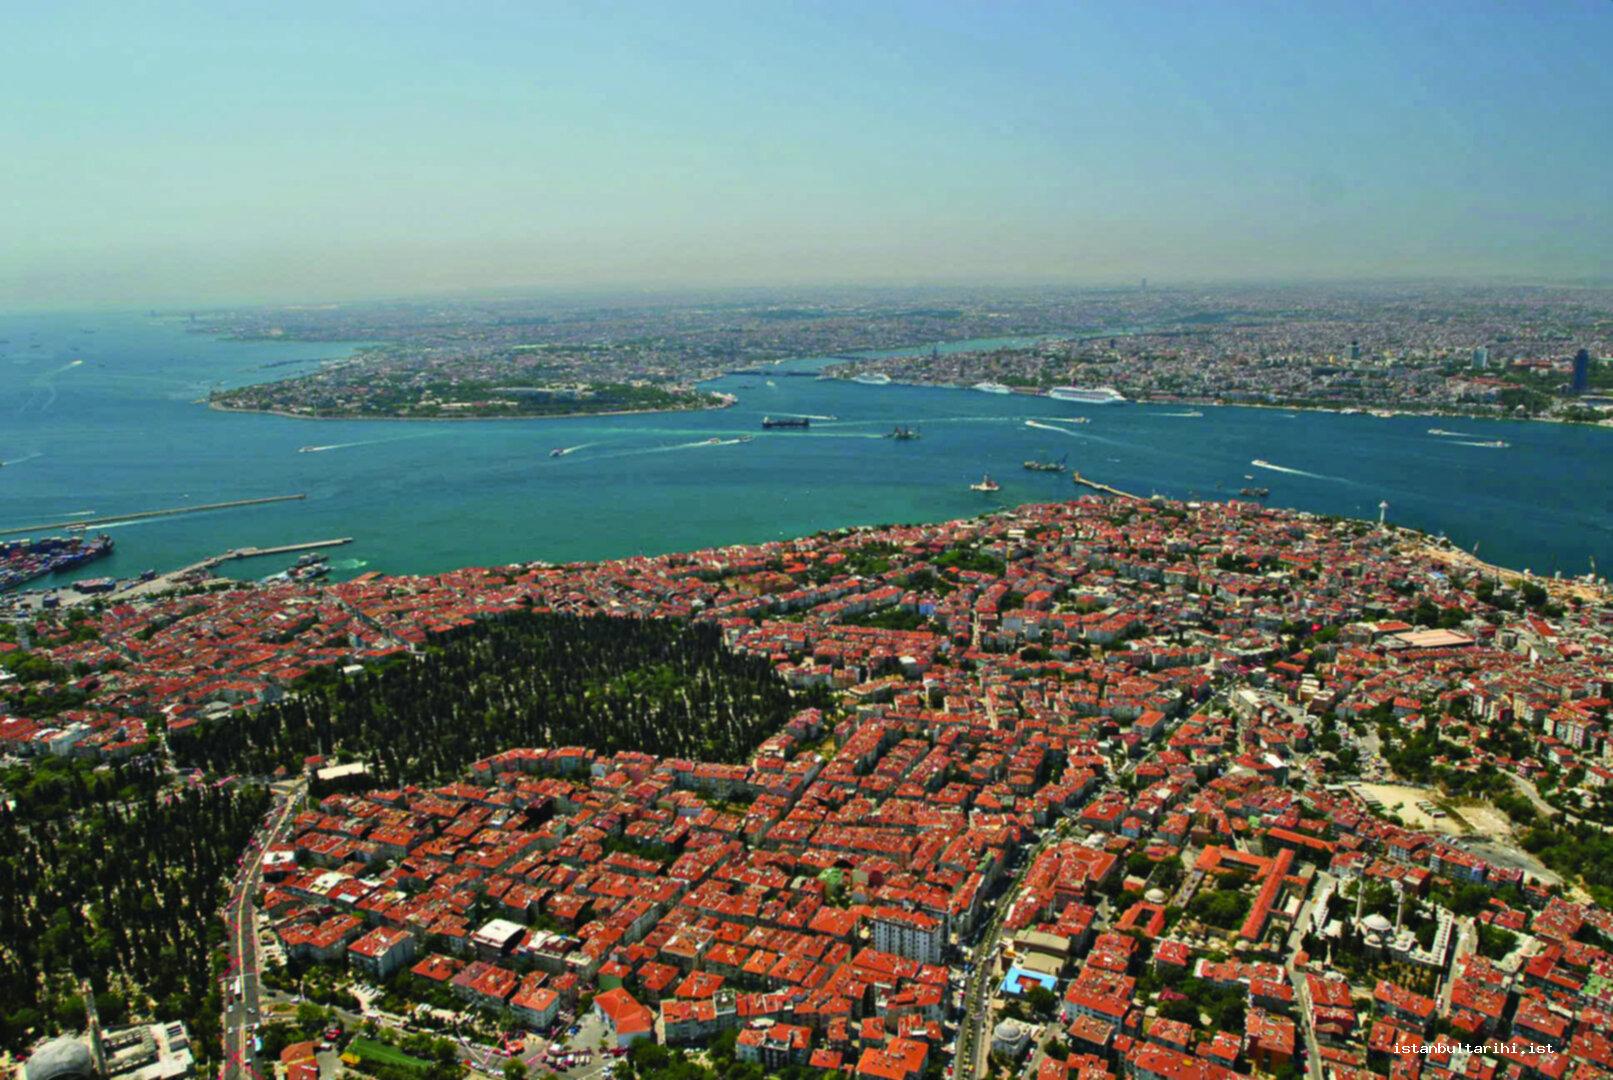 32- Üsküdar, the two banks of Bosporus and the Golden Horn